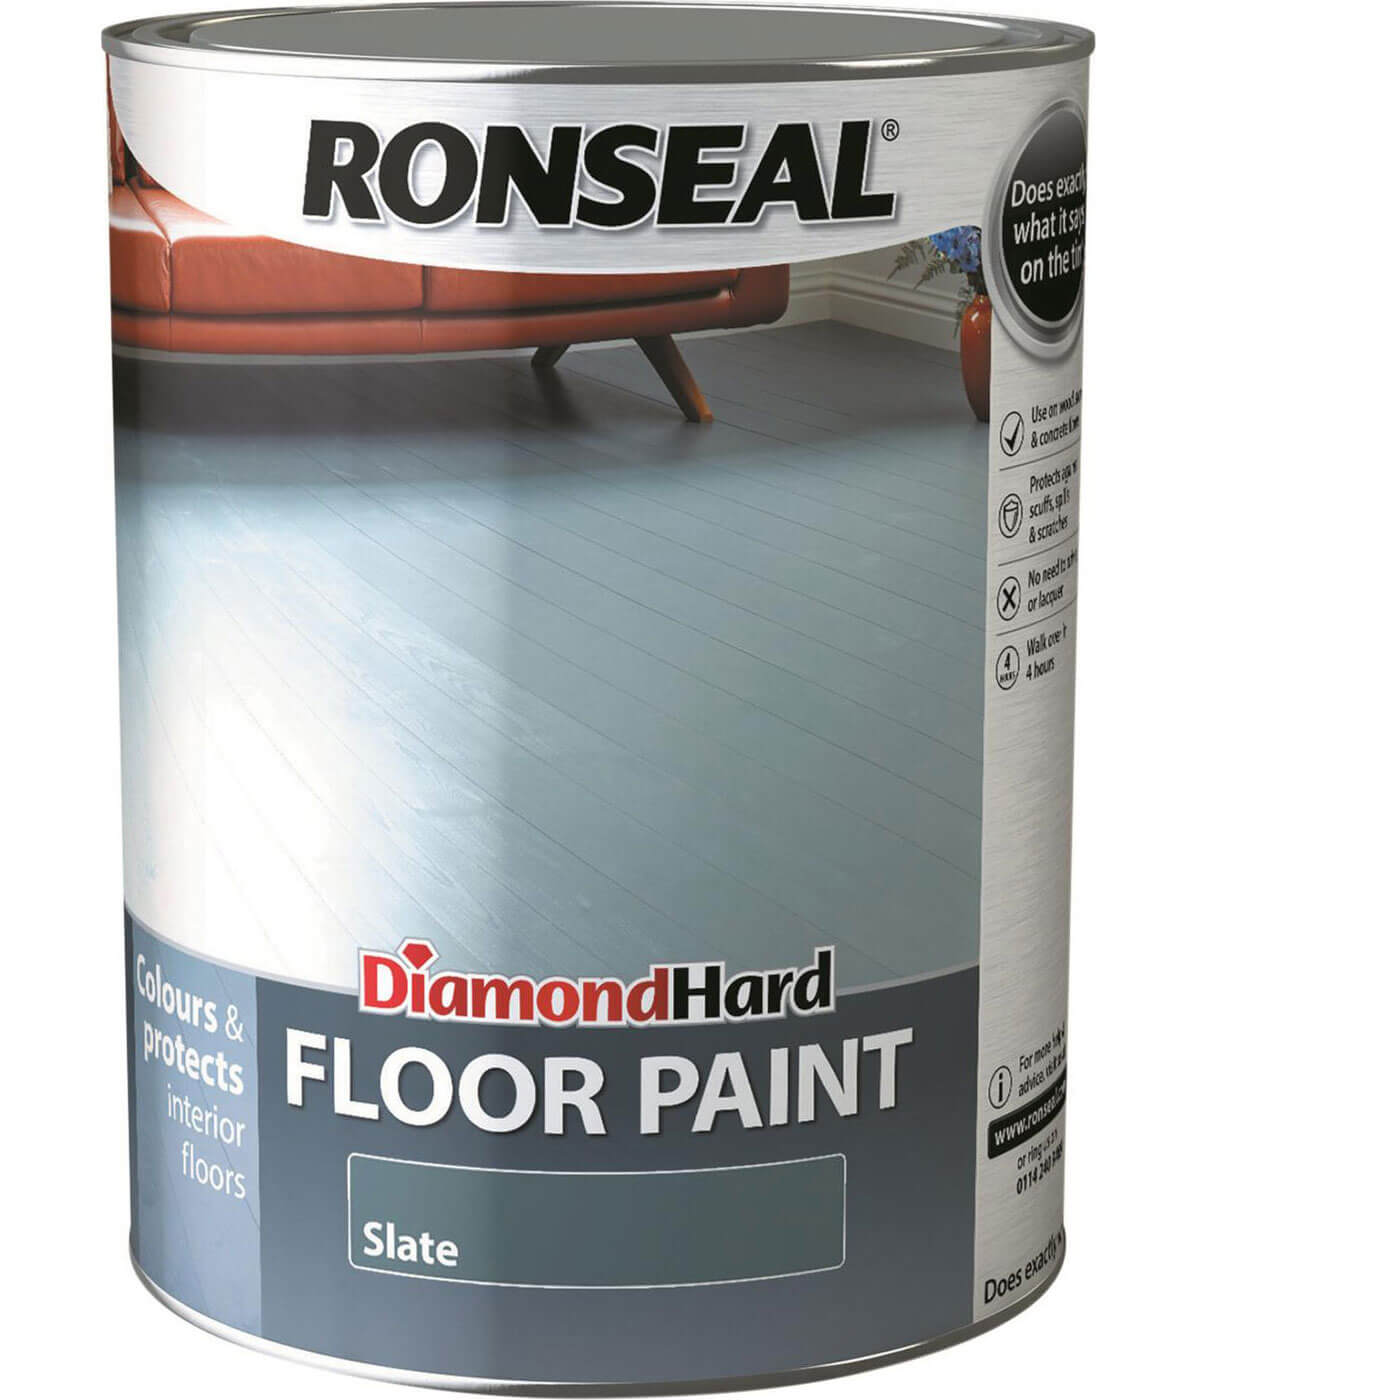 Ronseal Diamond Hard Floor Paint Slate 5l